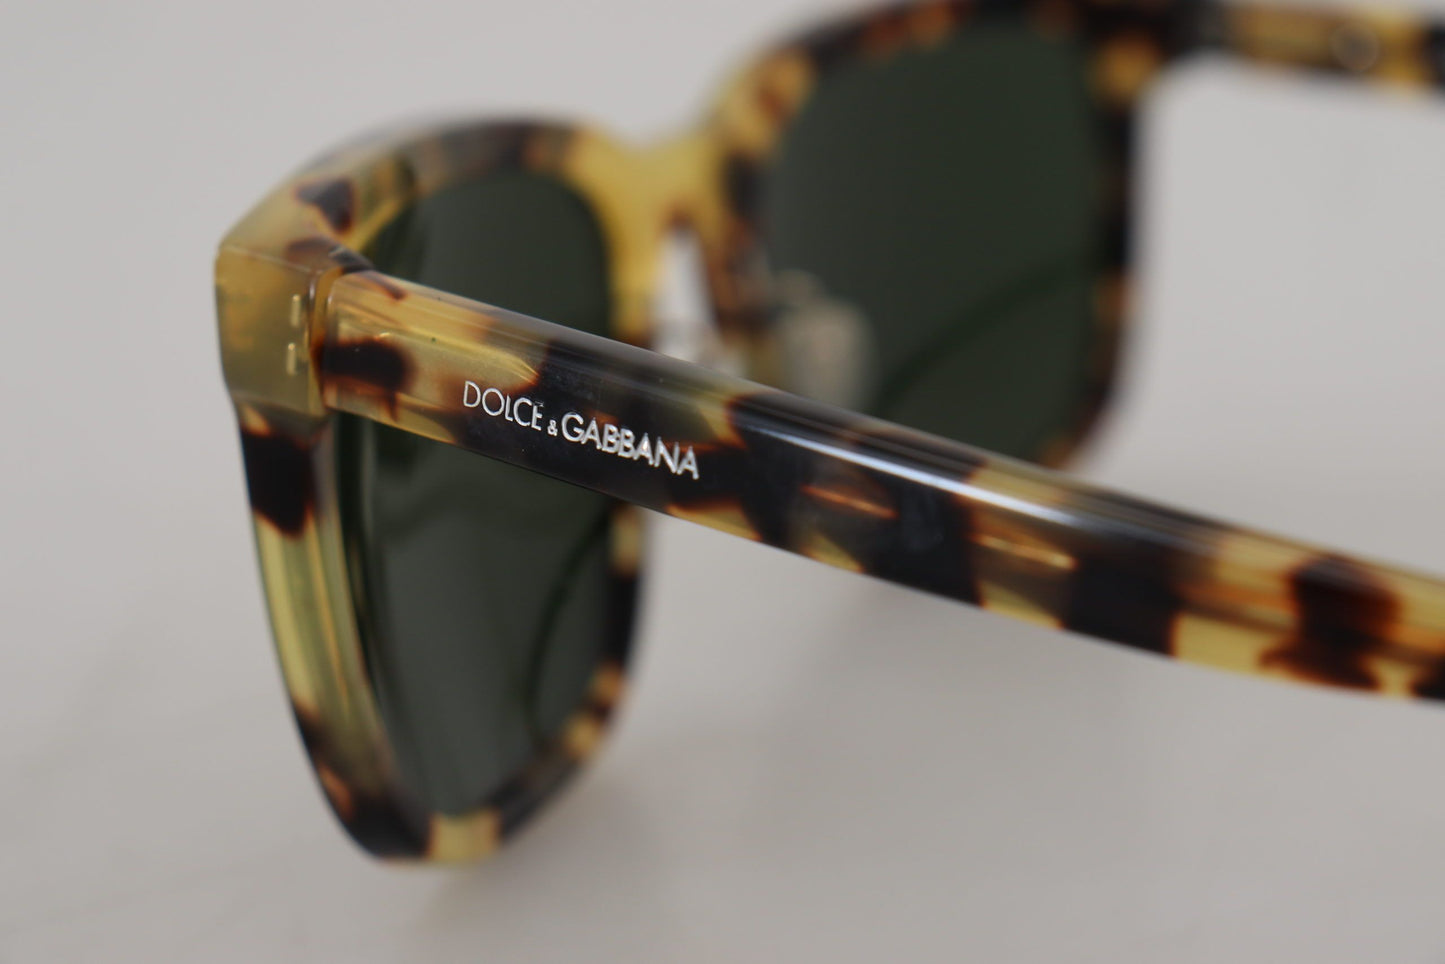 Elegant Wayfarer Havana Sunglasses